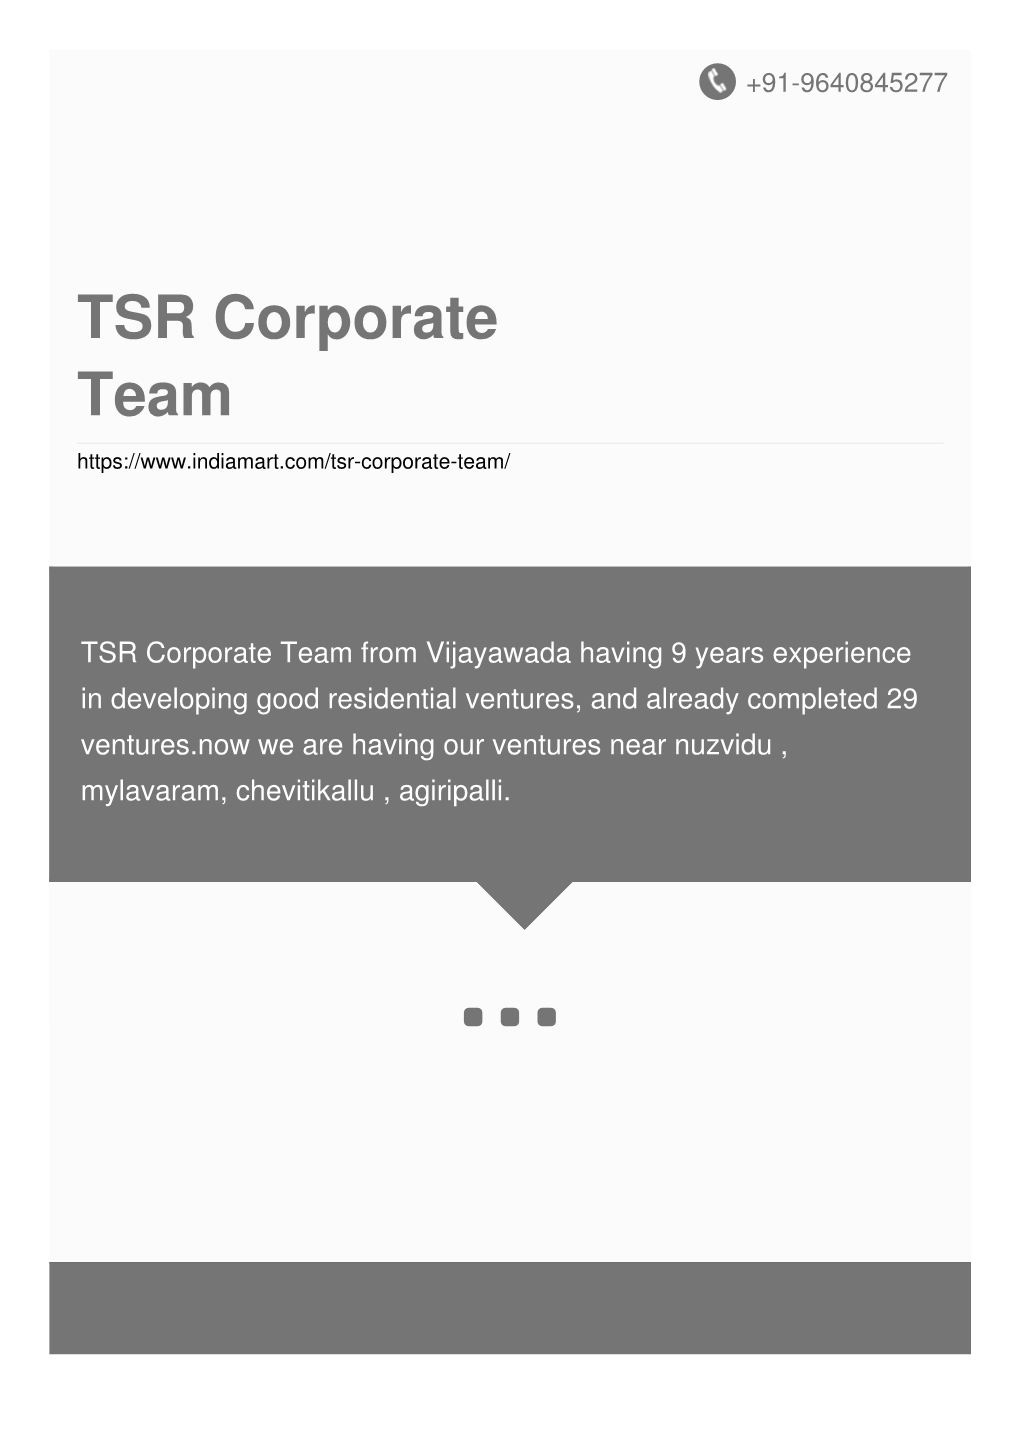 TSR Corporate Team